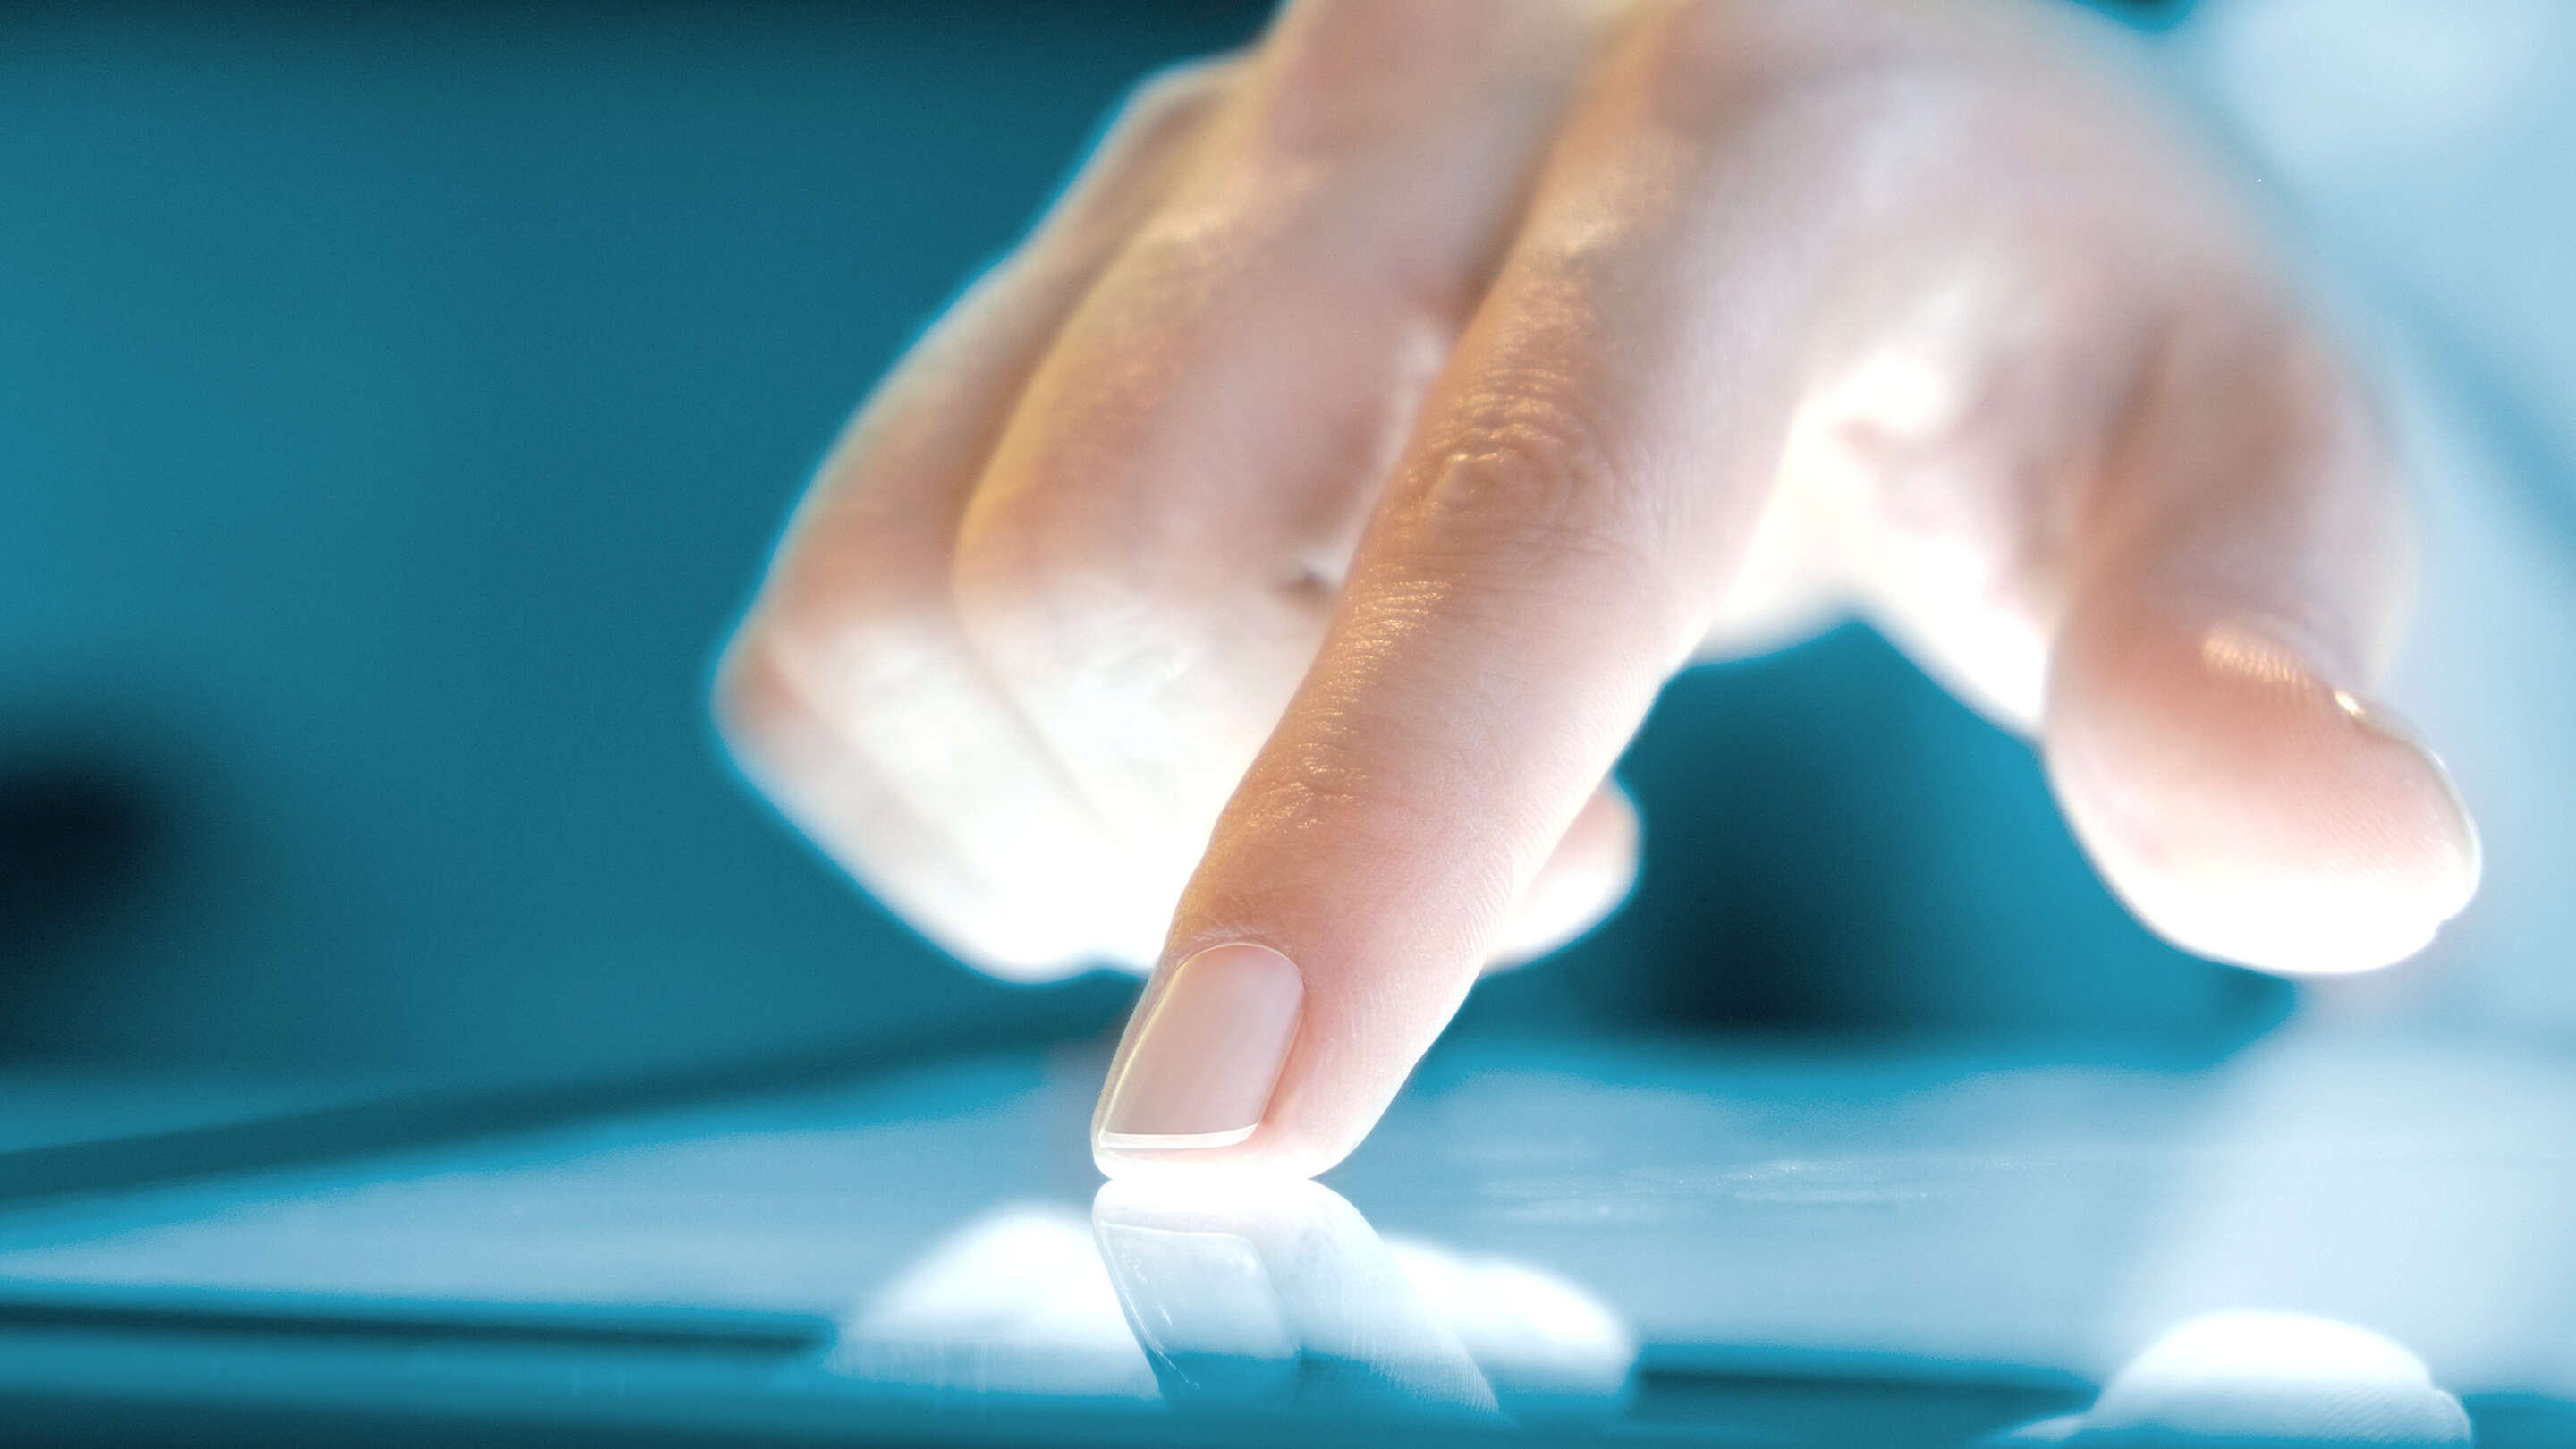 Ecran tactil - Comparație tehnologie ecran tactil Un prim-plan al unui deget care atinge un ecran tactil